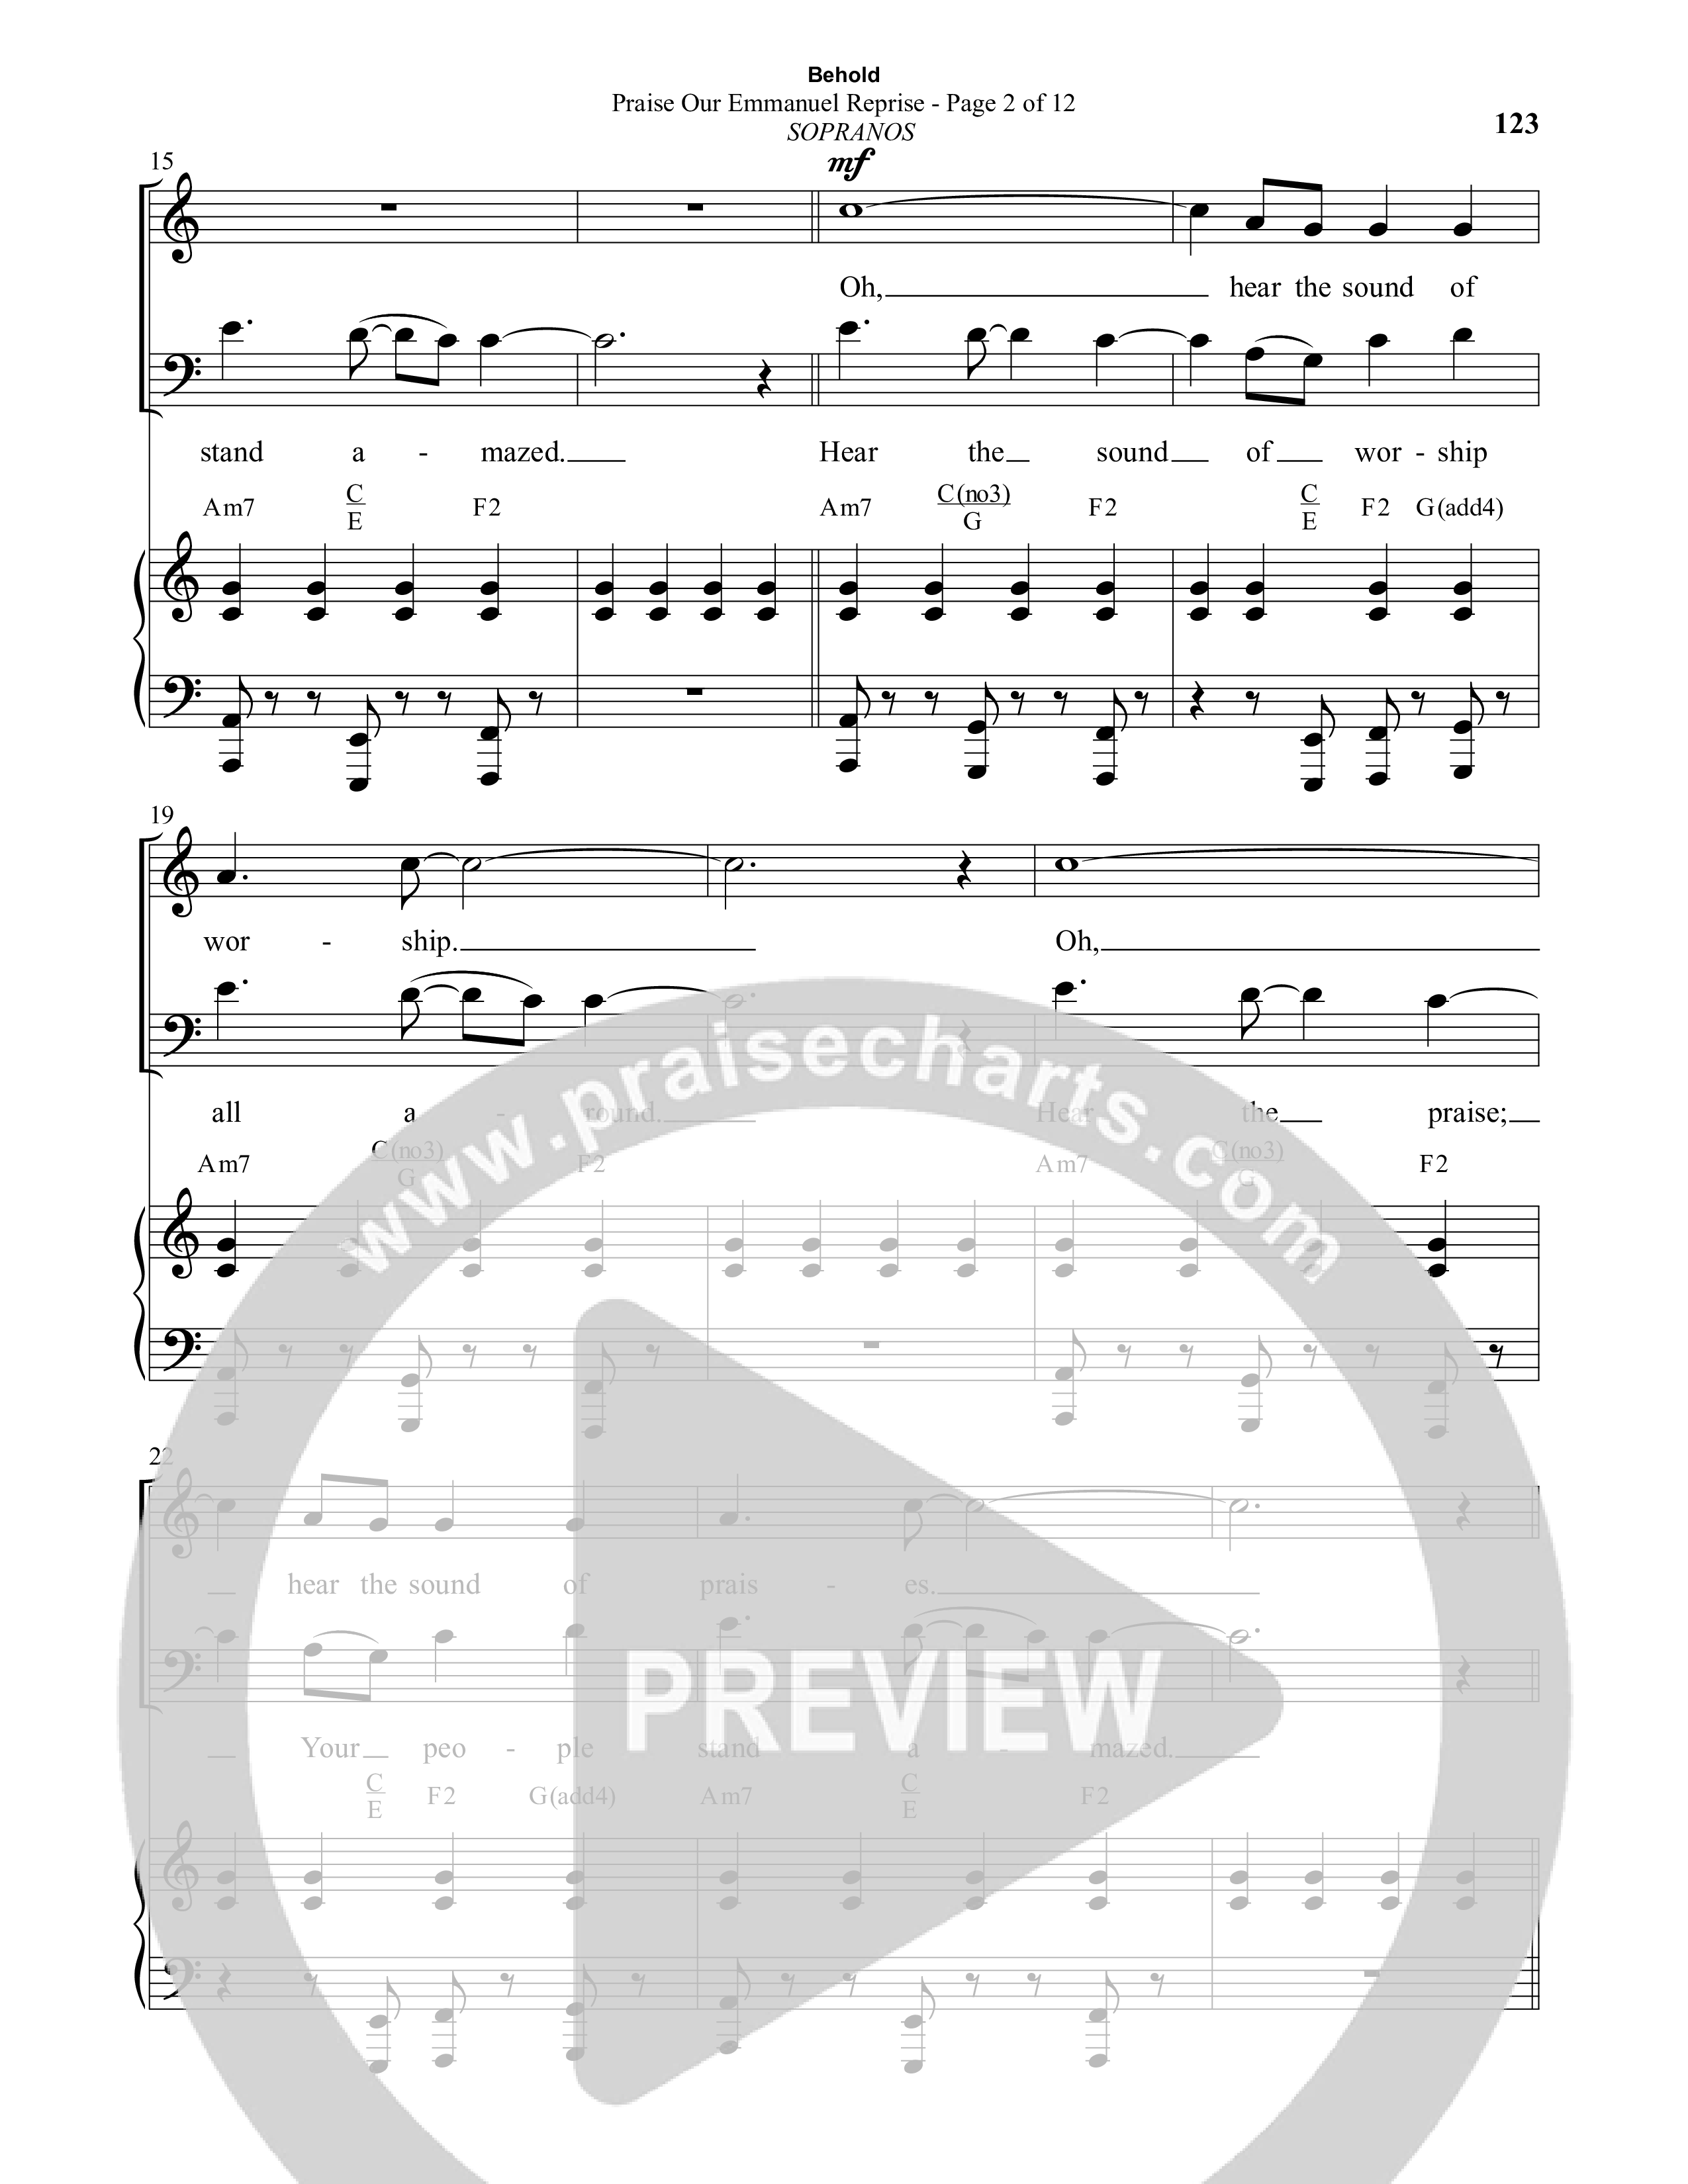 Behold (9 Song Choral Collection) Song 9 (Piano SATB) (Semsen Music / Arr. John Bolin / Orch. Cliff Duren)